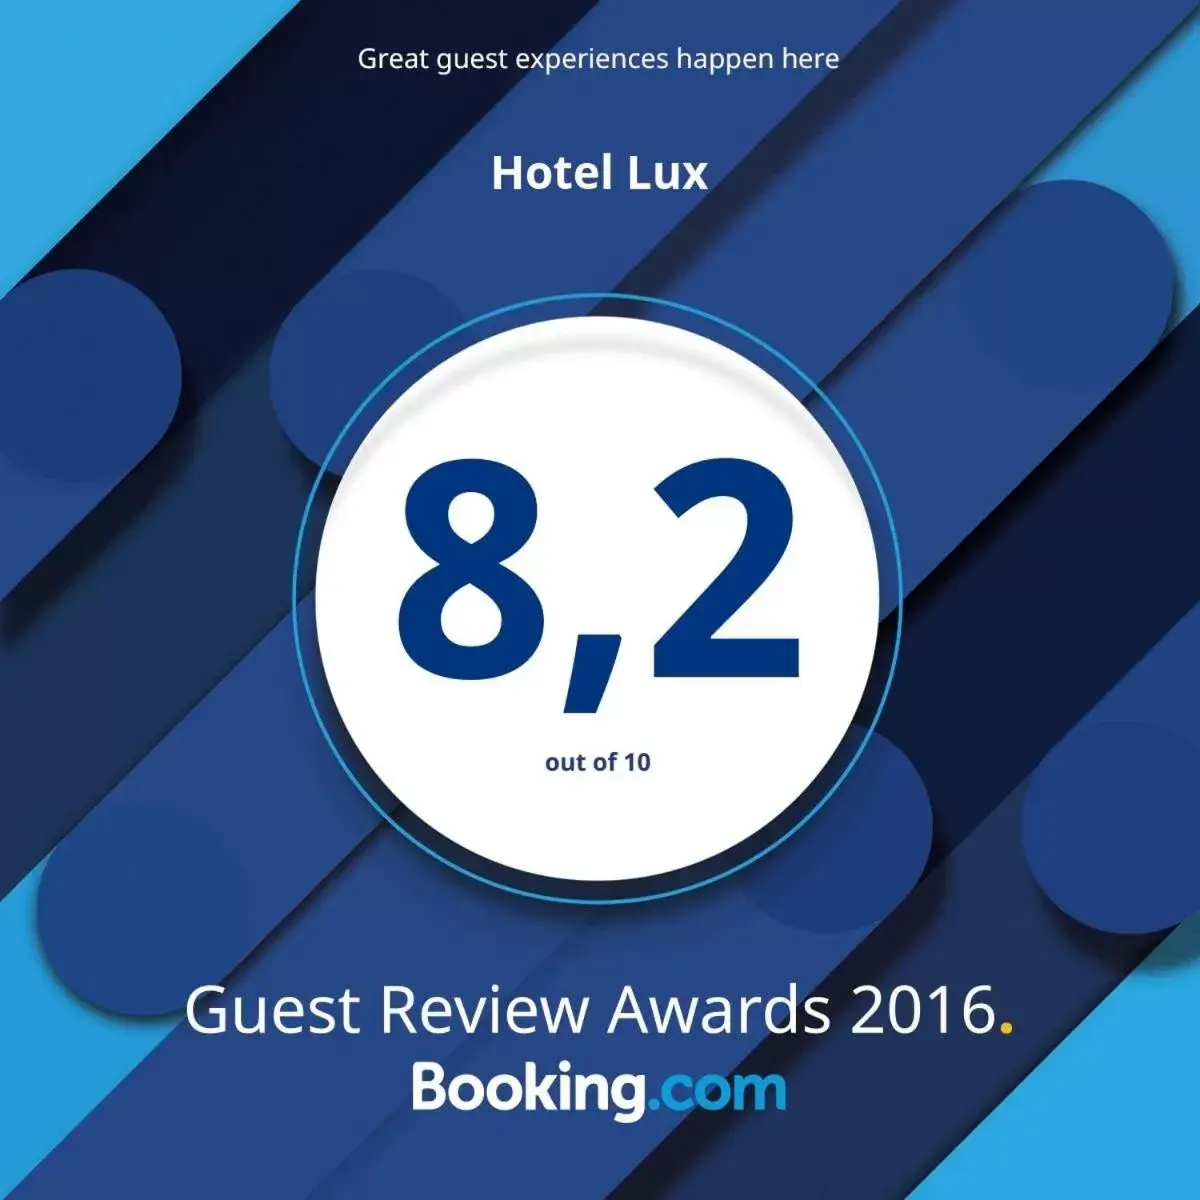 Certificate/Award in Hotel Lux